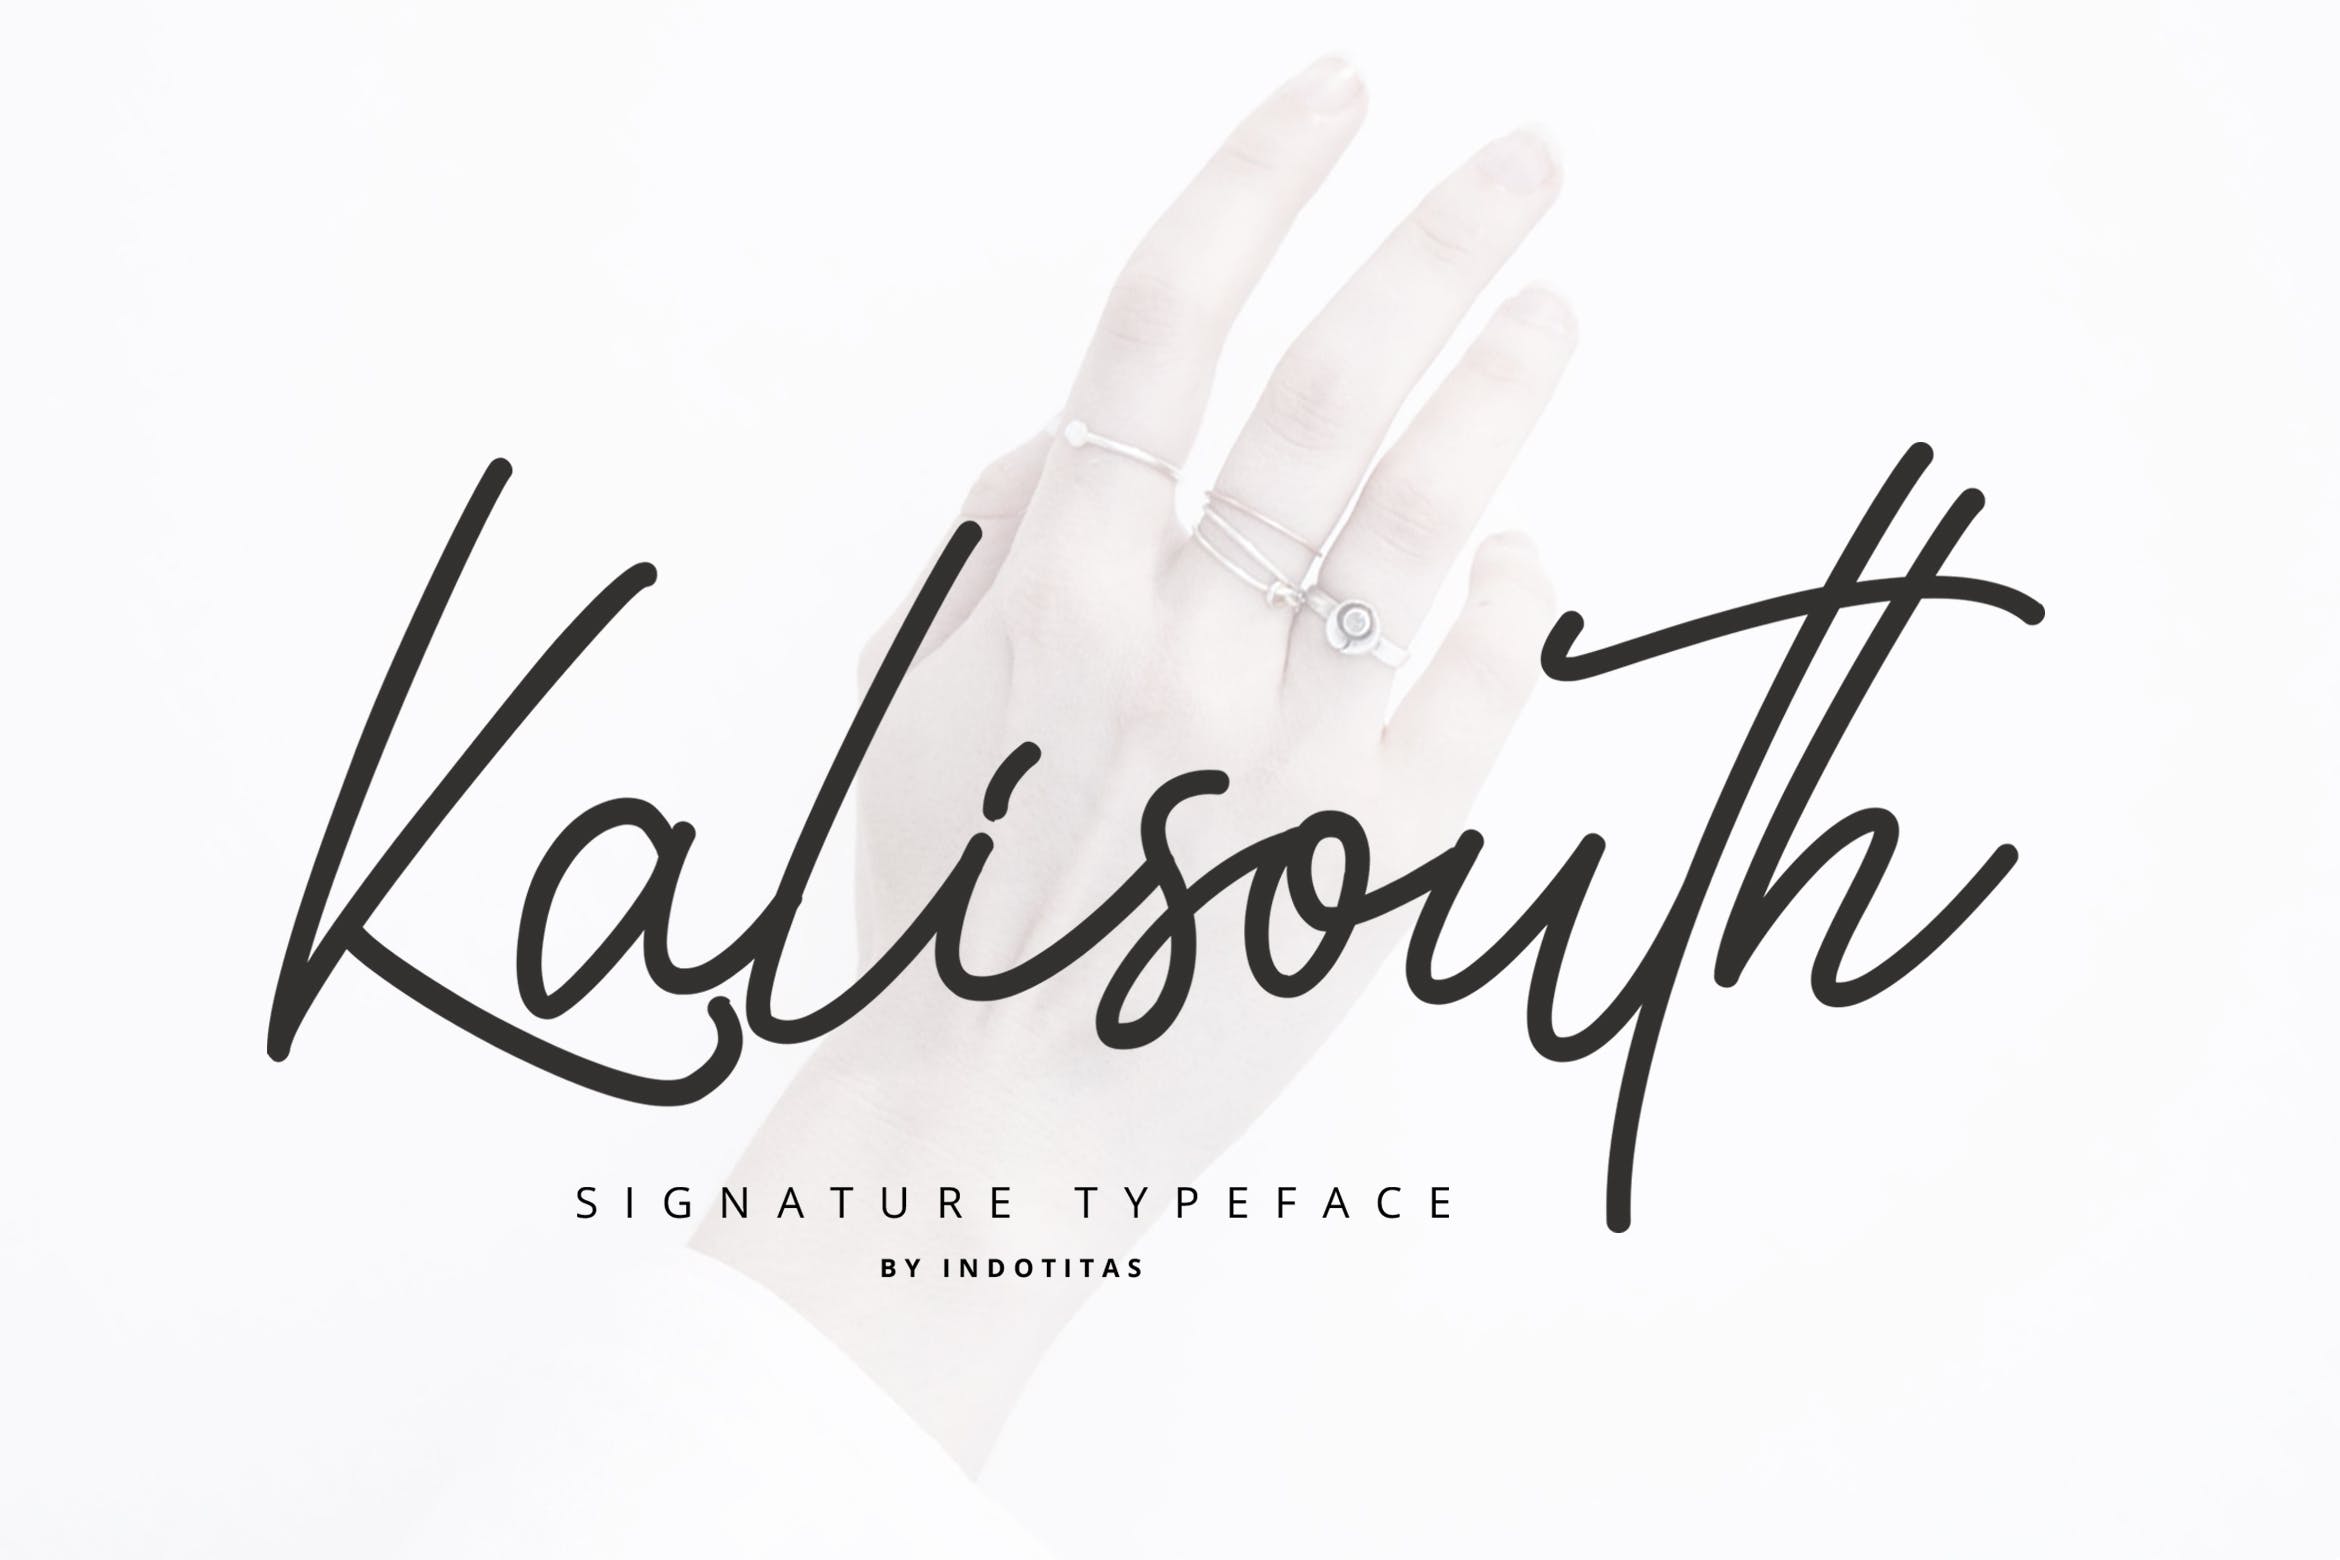 现代钢笔书法英文签名字体下载 Kalisouth Signature Font插图